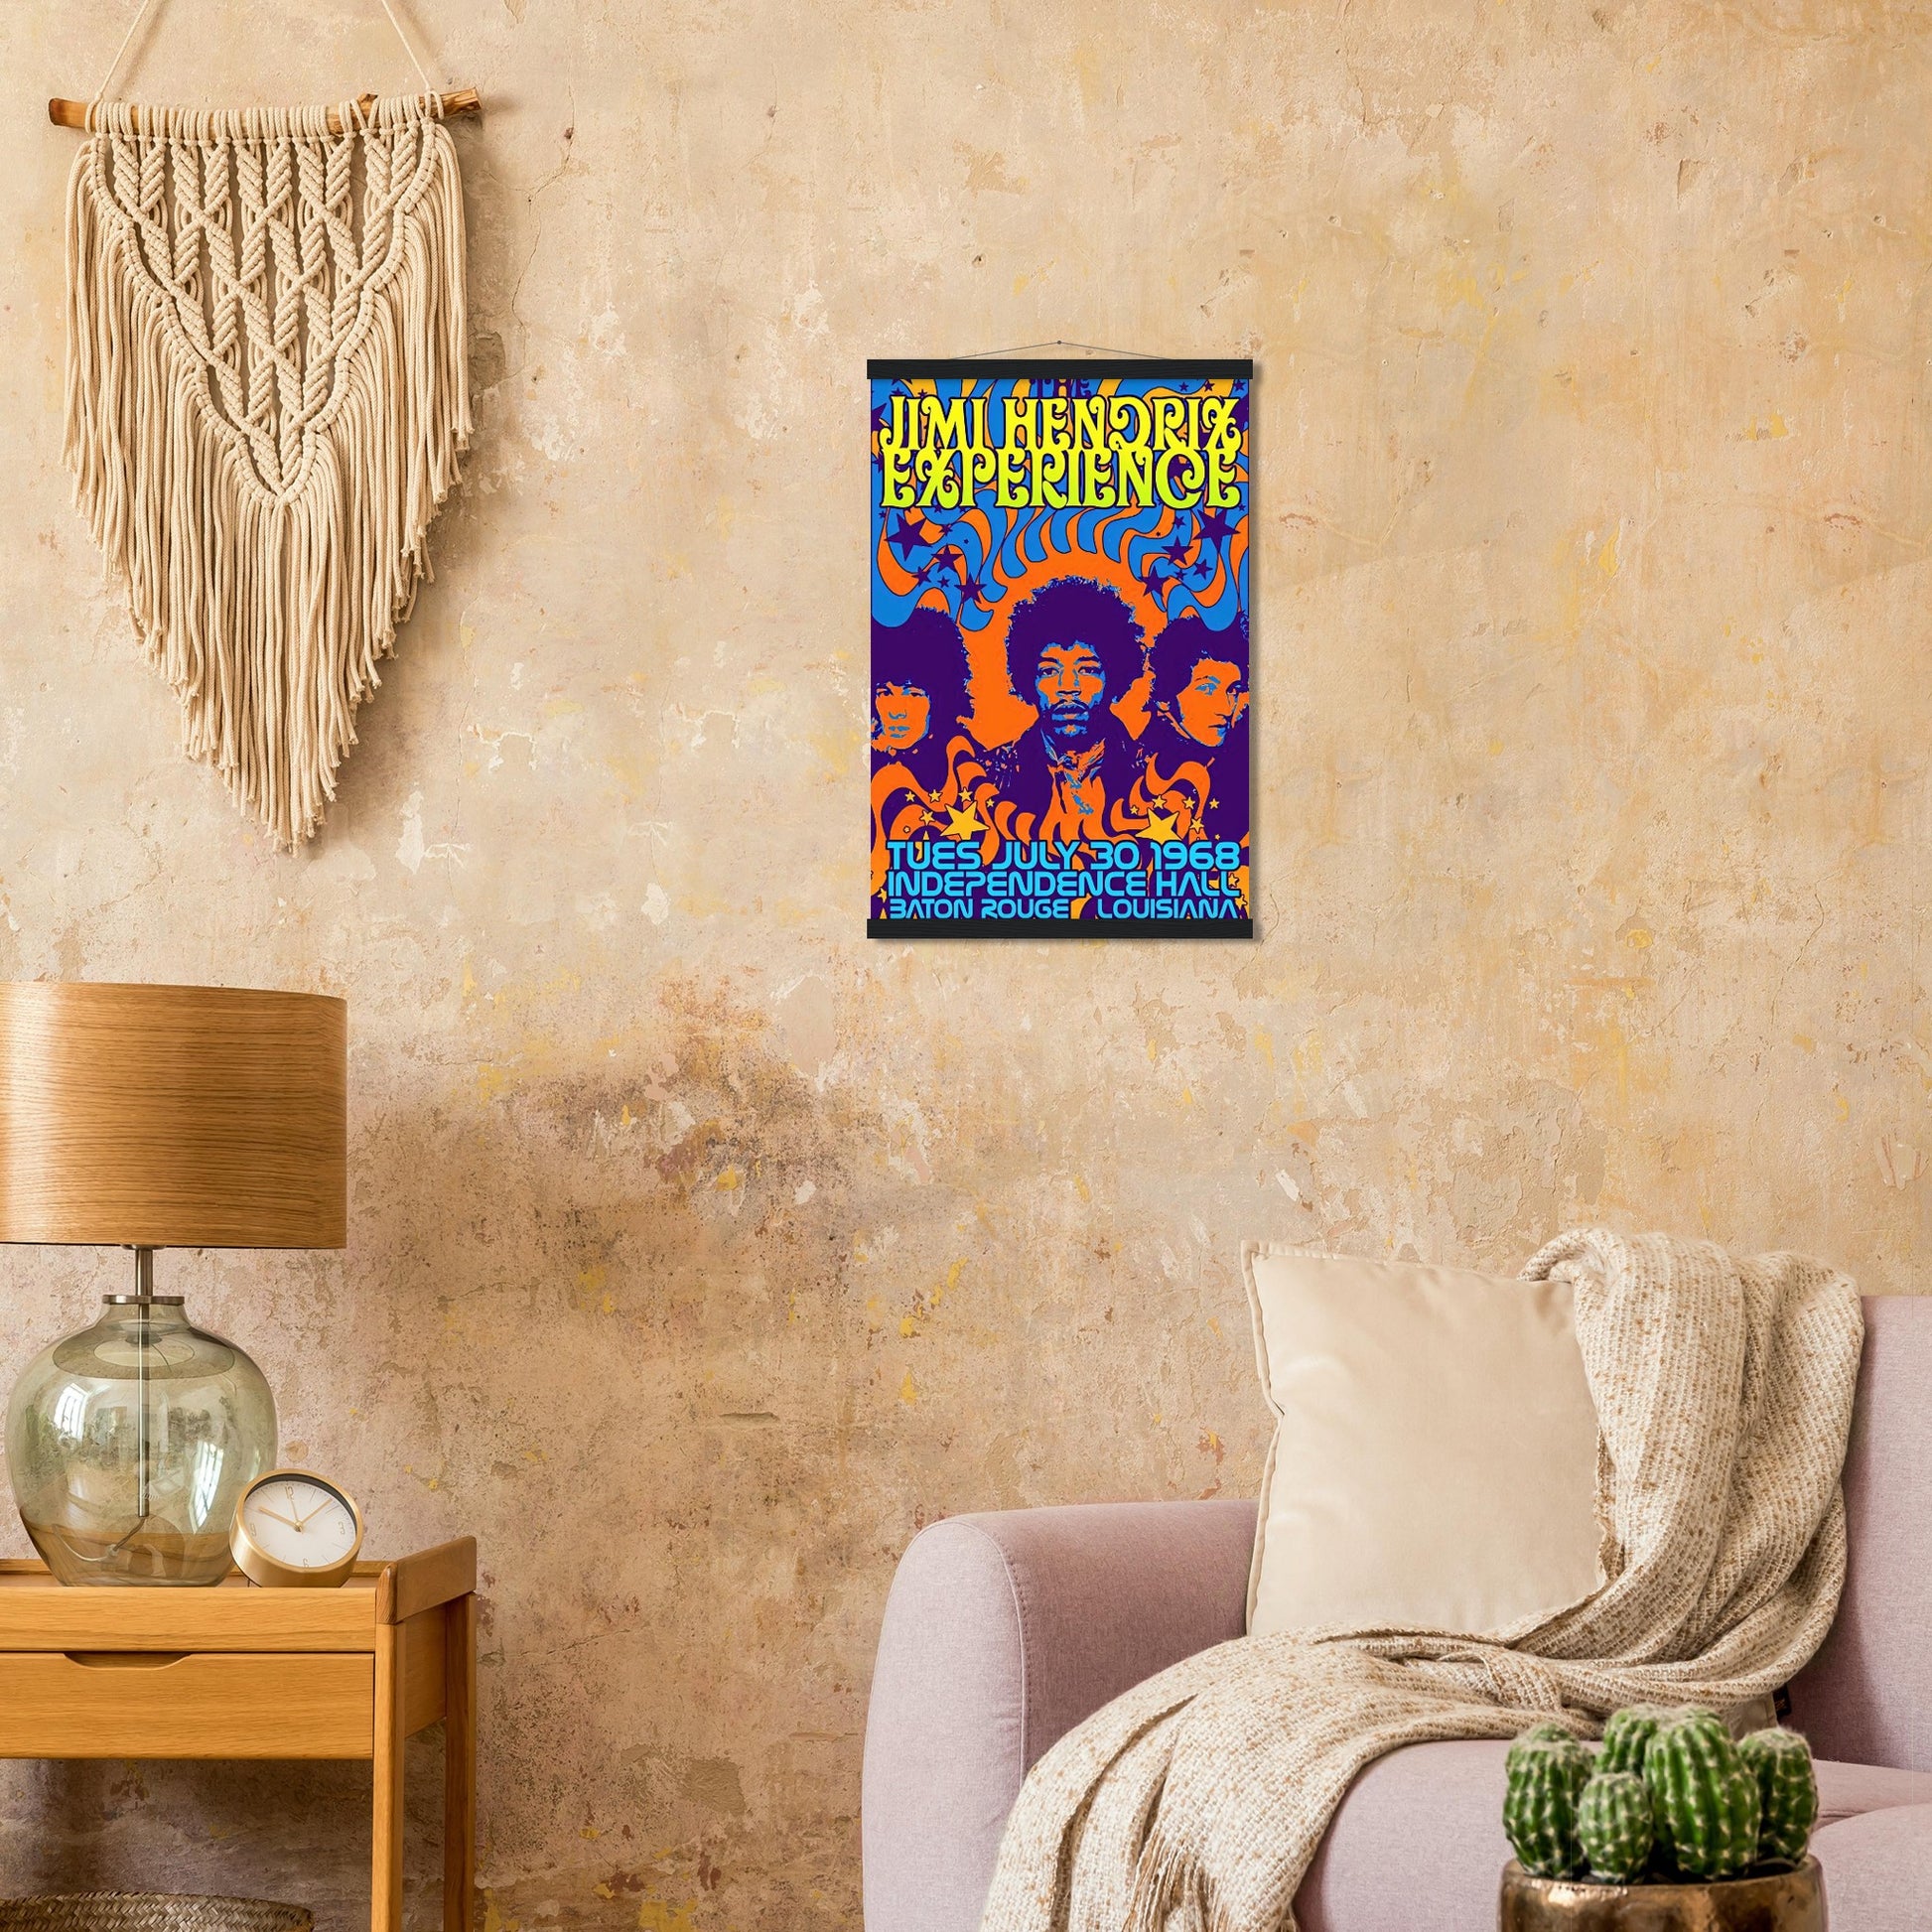 Jimi Hendrix Vintage Poster Reprint on Premium Matte Paper - Posterify